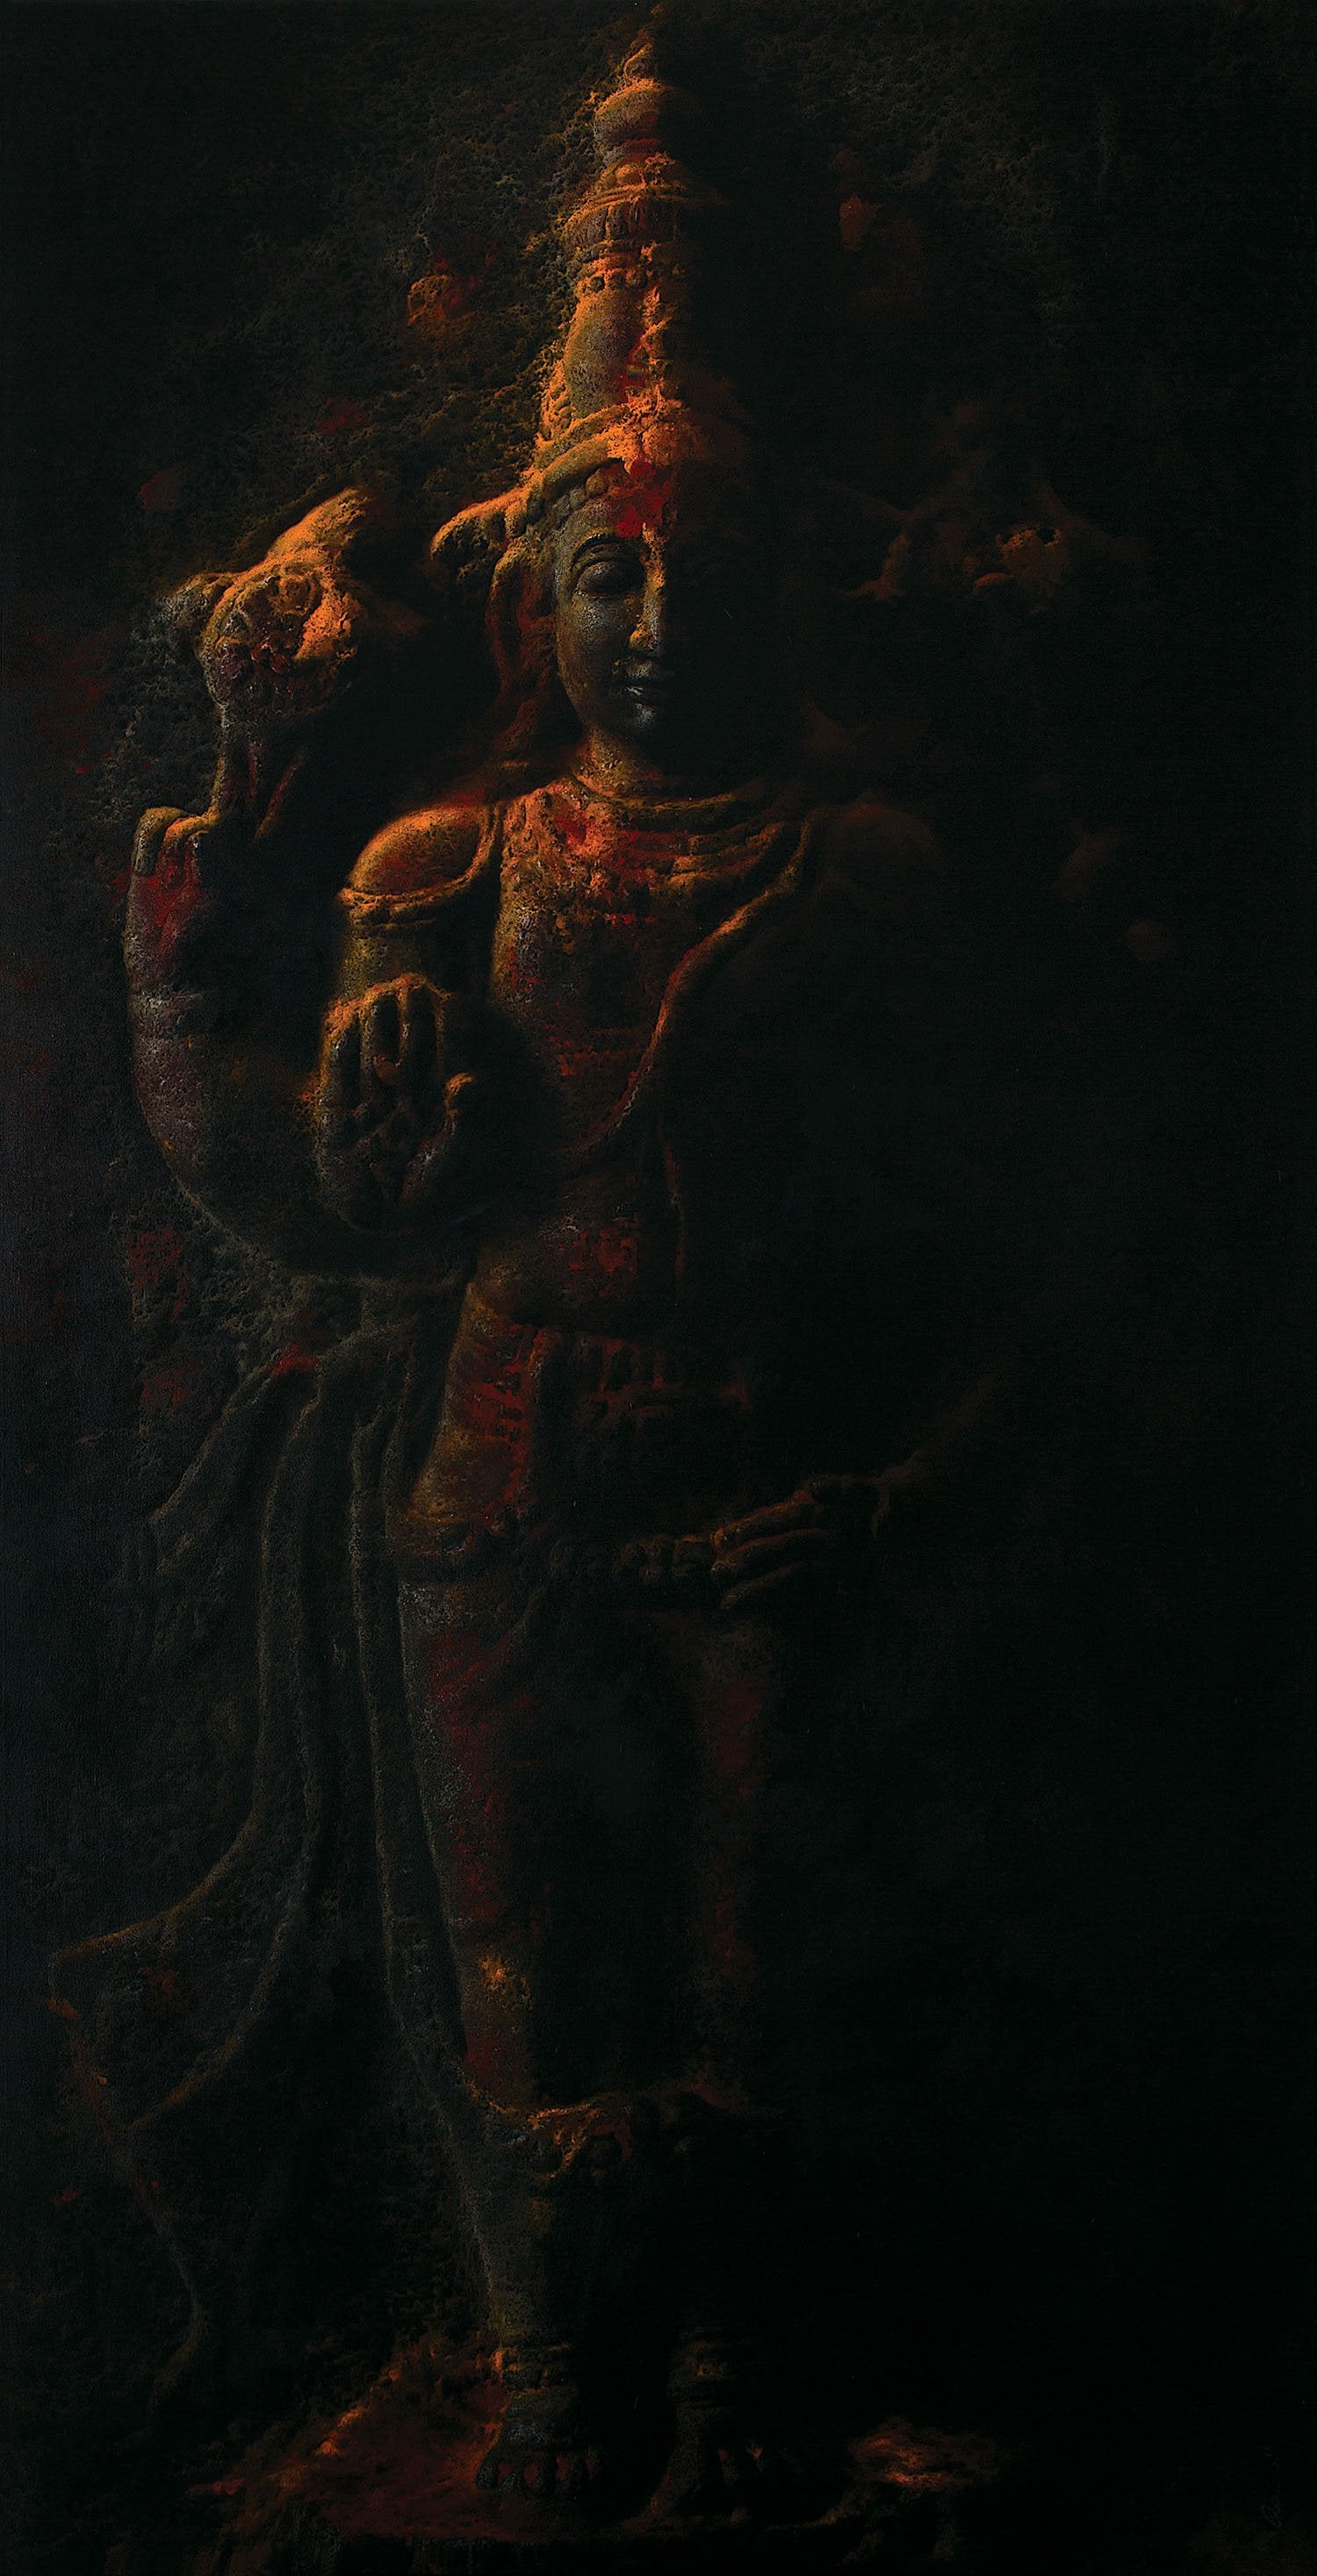 Temple Series IV|B. Venkatesan- Oil on Canvas, 2018, 60 x 30 inches